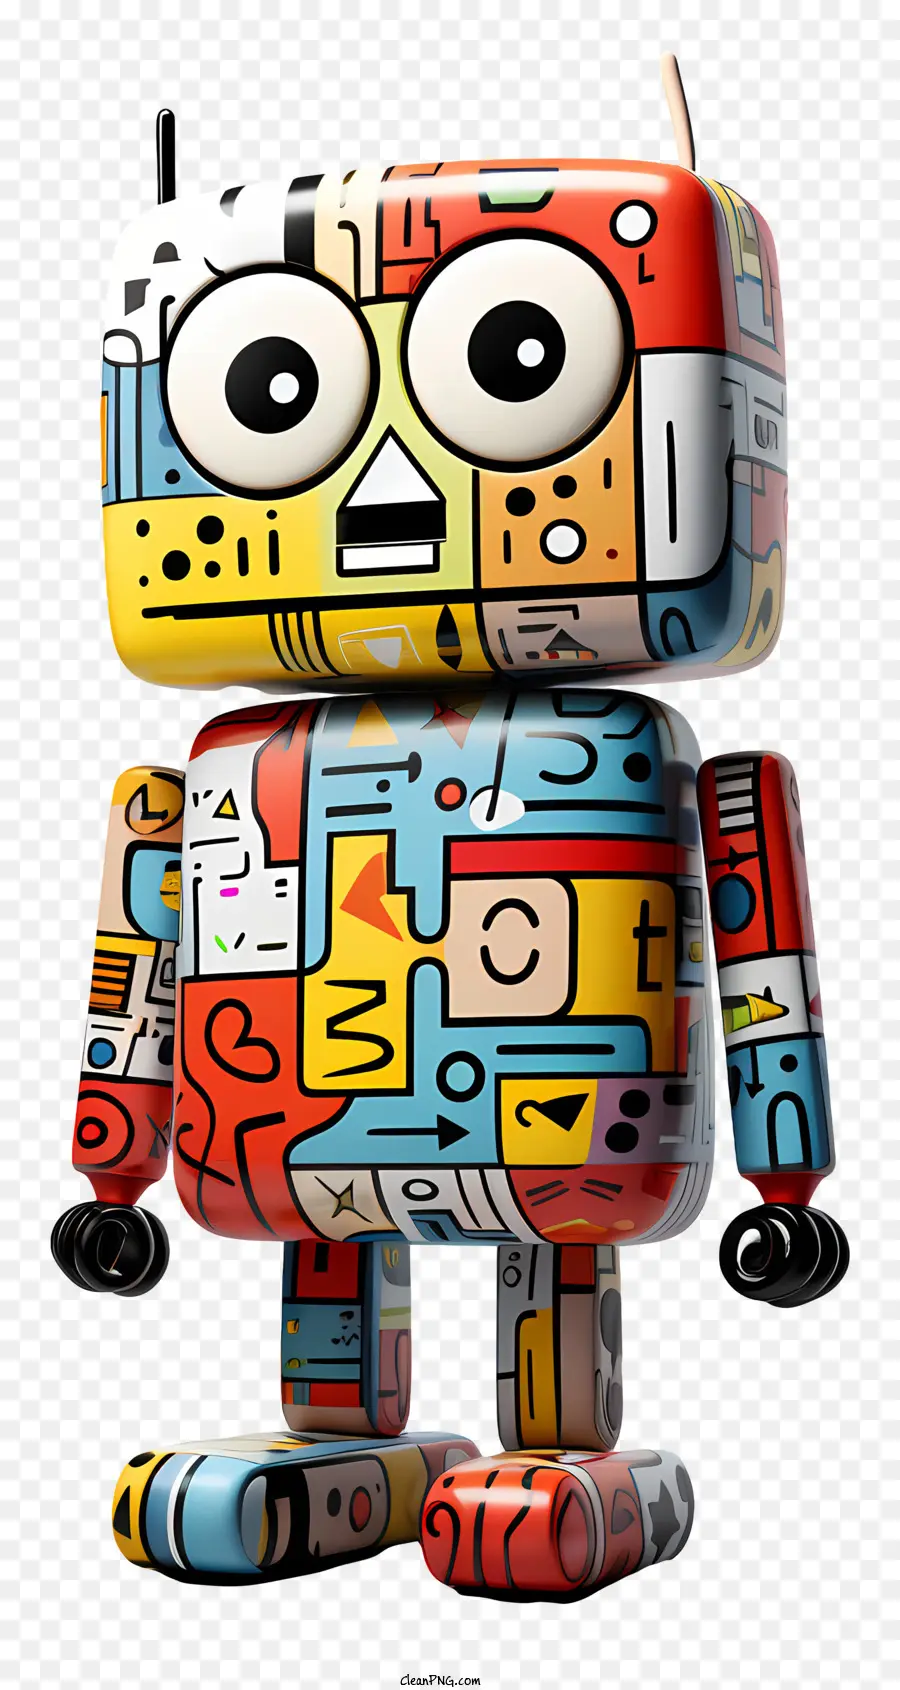 Cartoon Spielzeug 3D Rendering Roboter Cartoon Charakter Friendly Ausdruck Buntes abstraktes Design - Buntes, freundlicher 3D -Cartoon -Roboter mit Brille